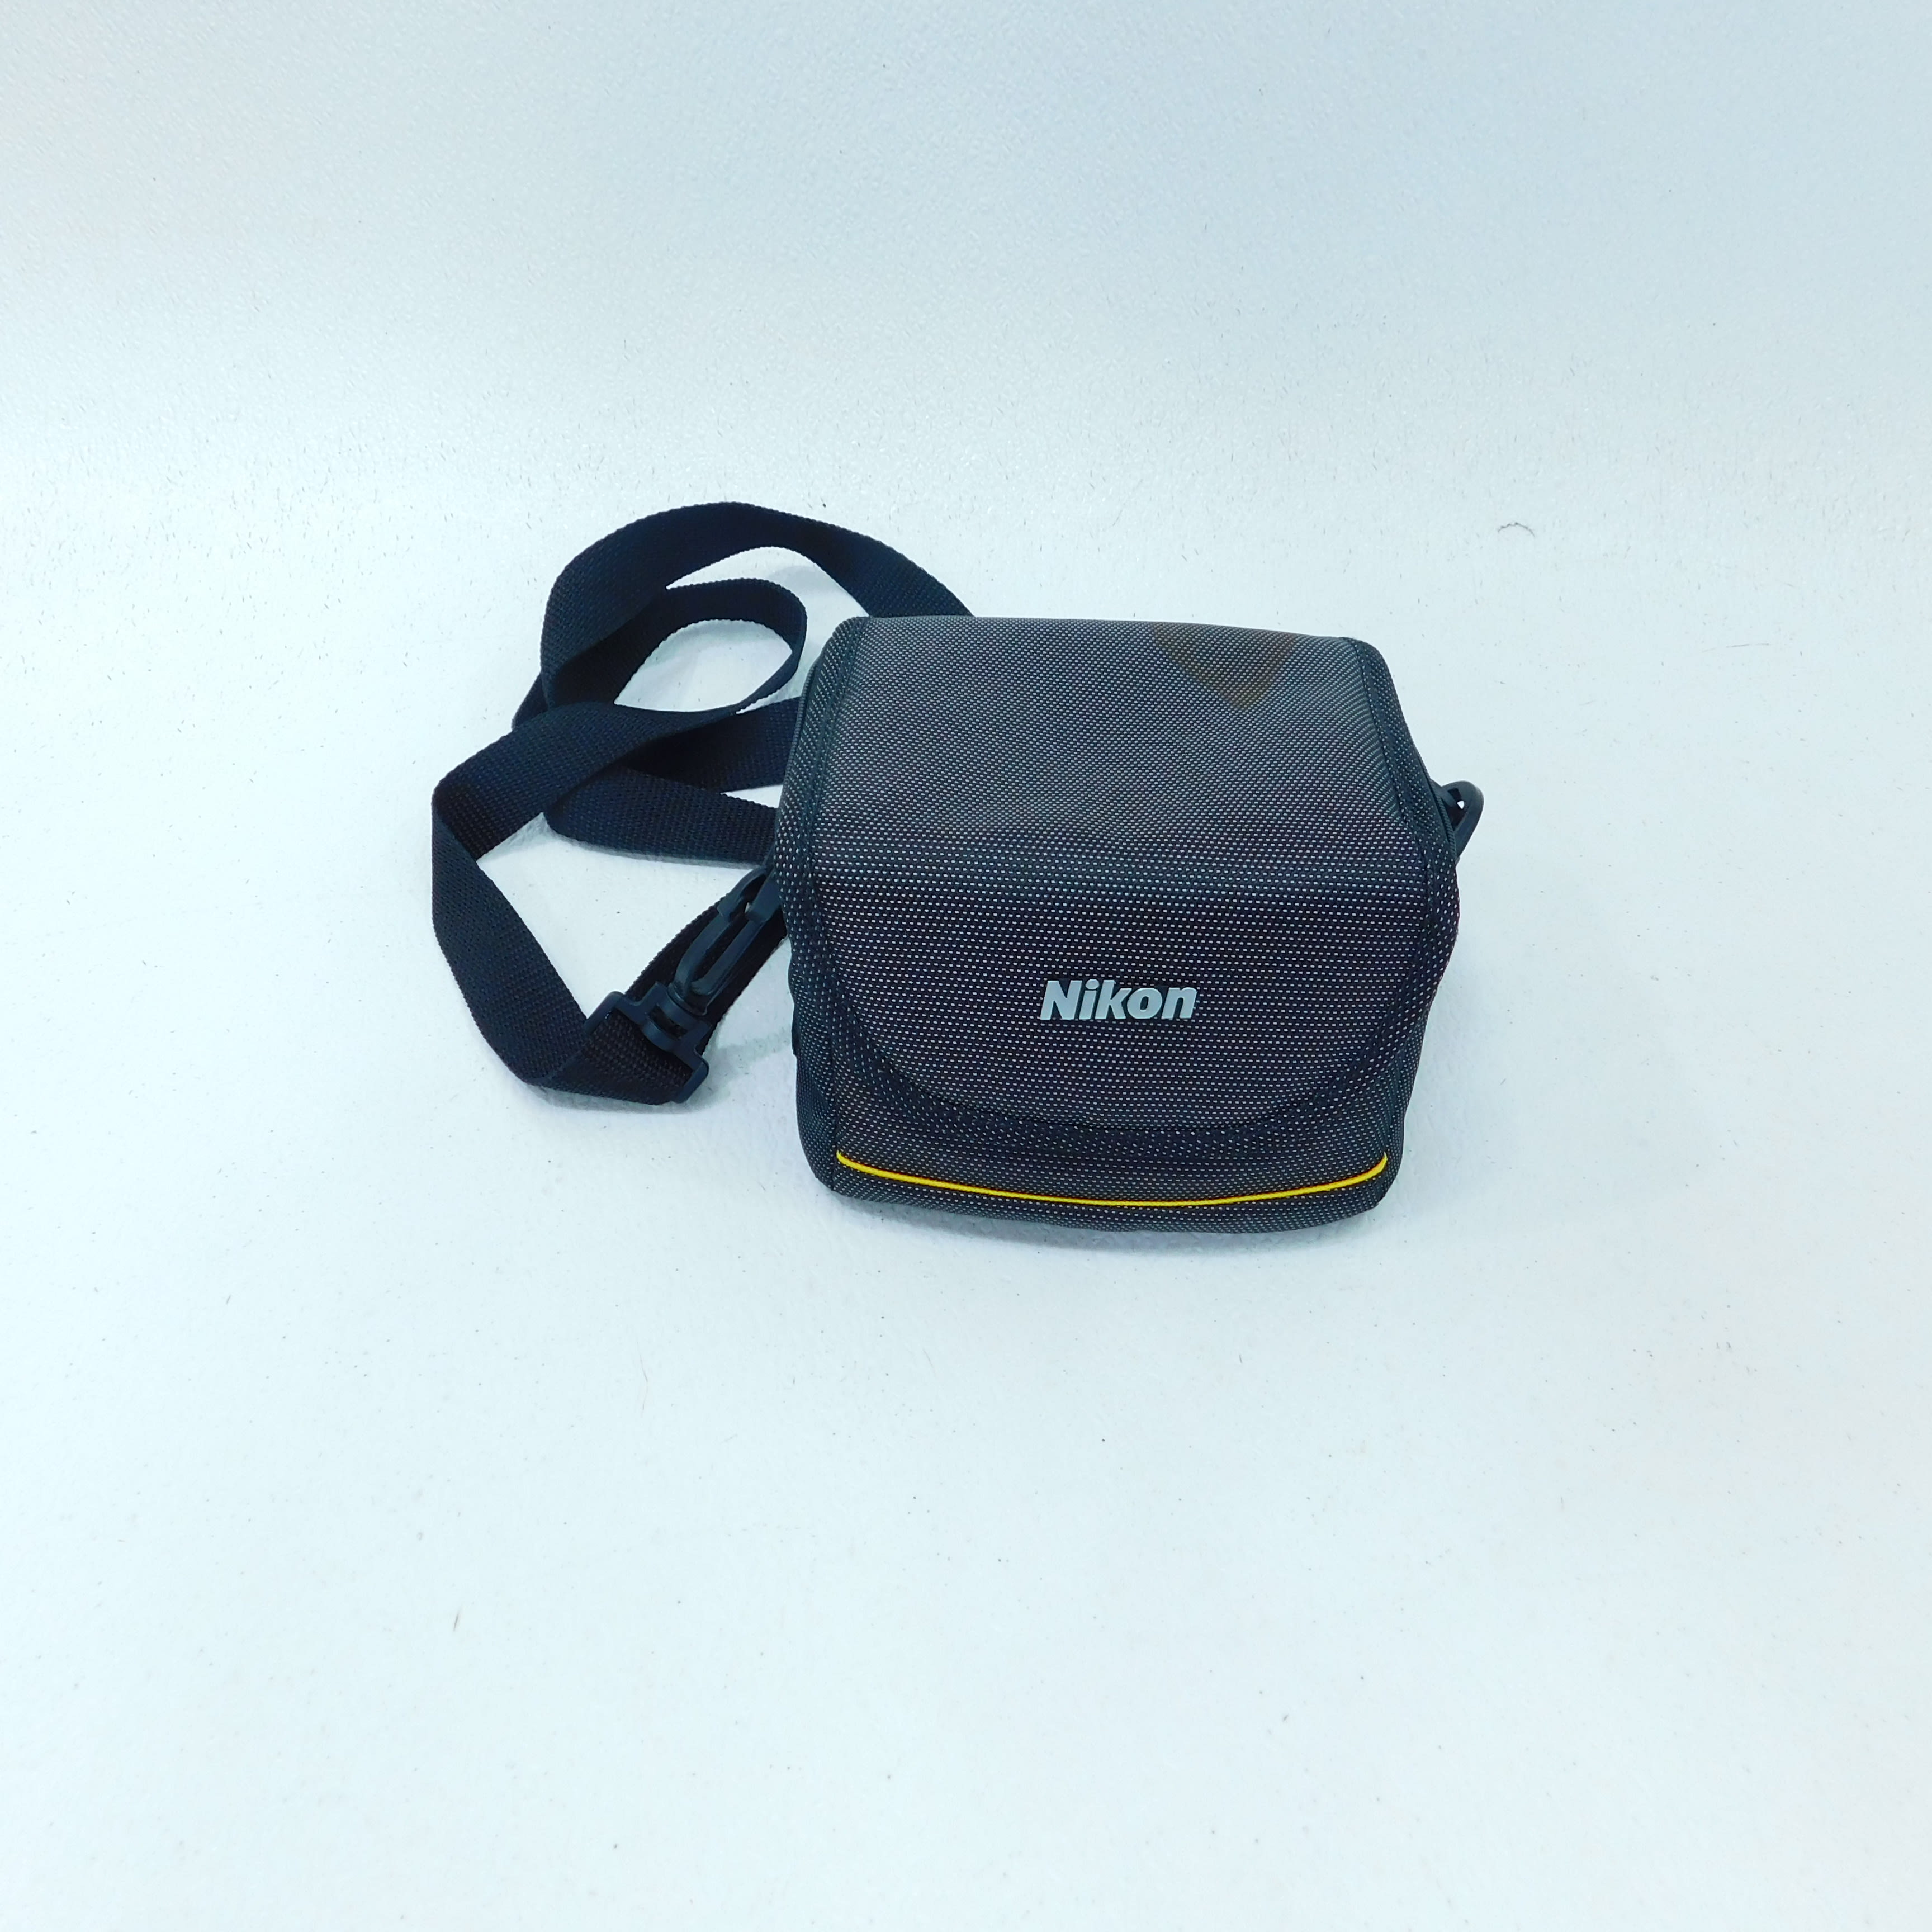 Nikon Digital SLR Camera Bag Black 9793 - Best Buy